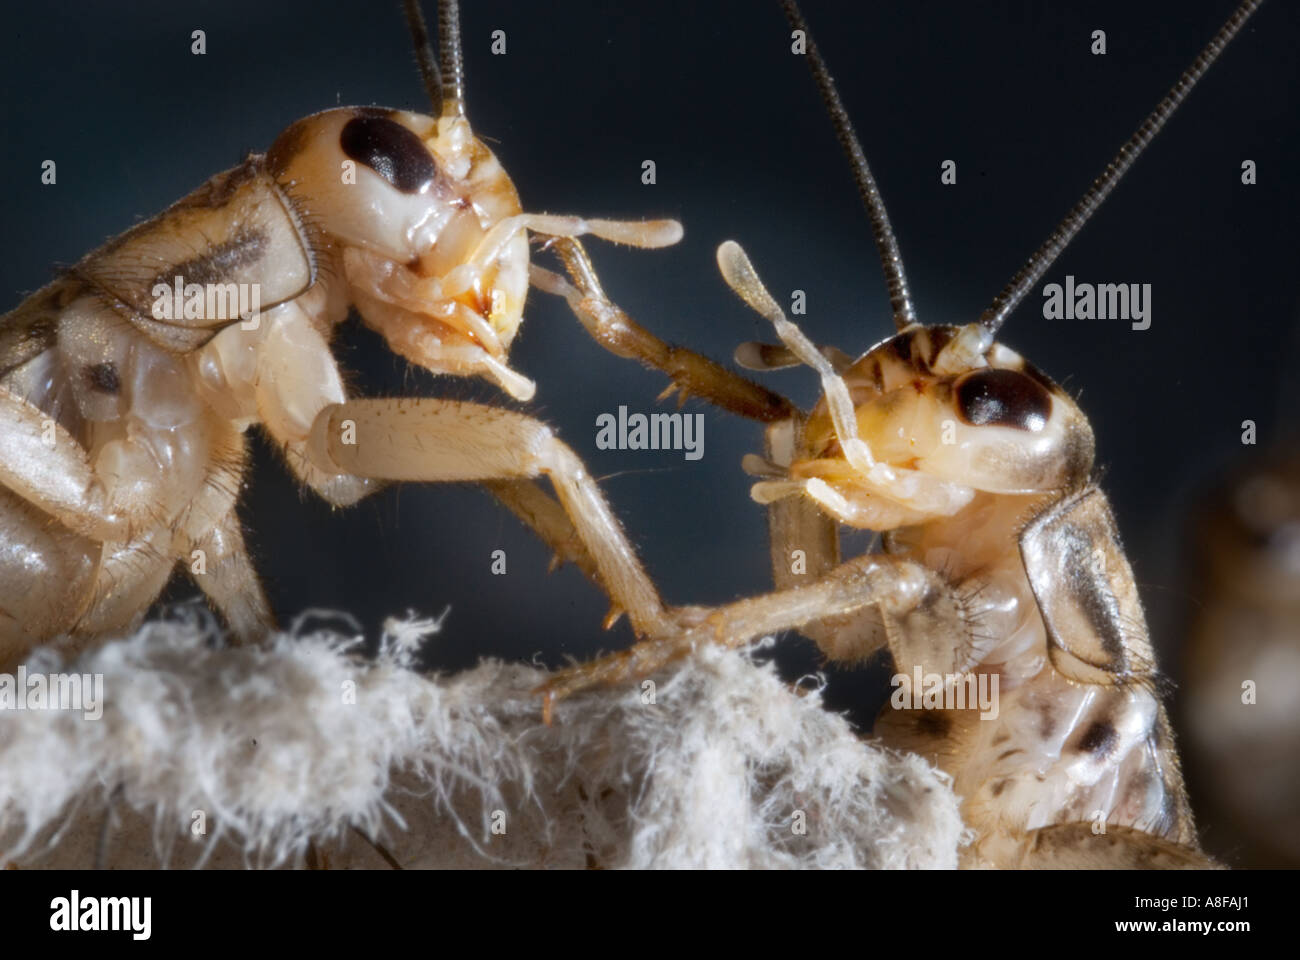 house cricket crickets Gryllidae Gryllinae Gryllus Heimchen Acheta domesticus communicate communication  2 two fight fighting co Stock Photo